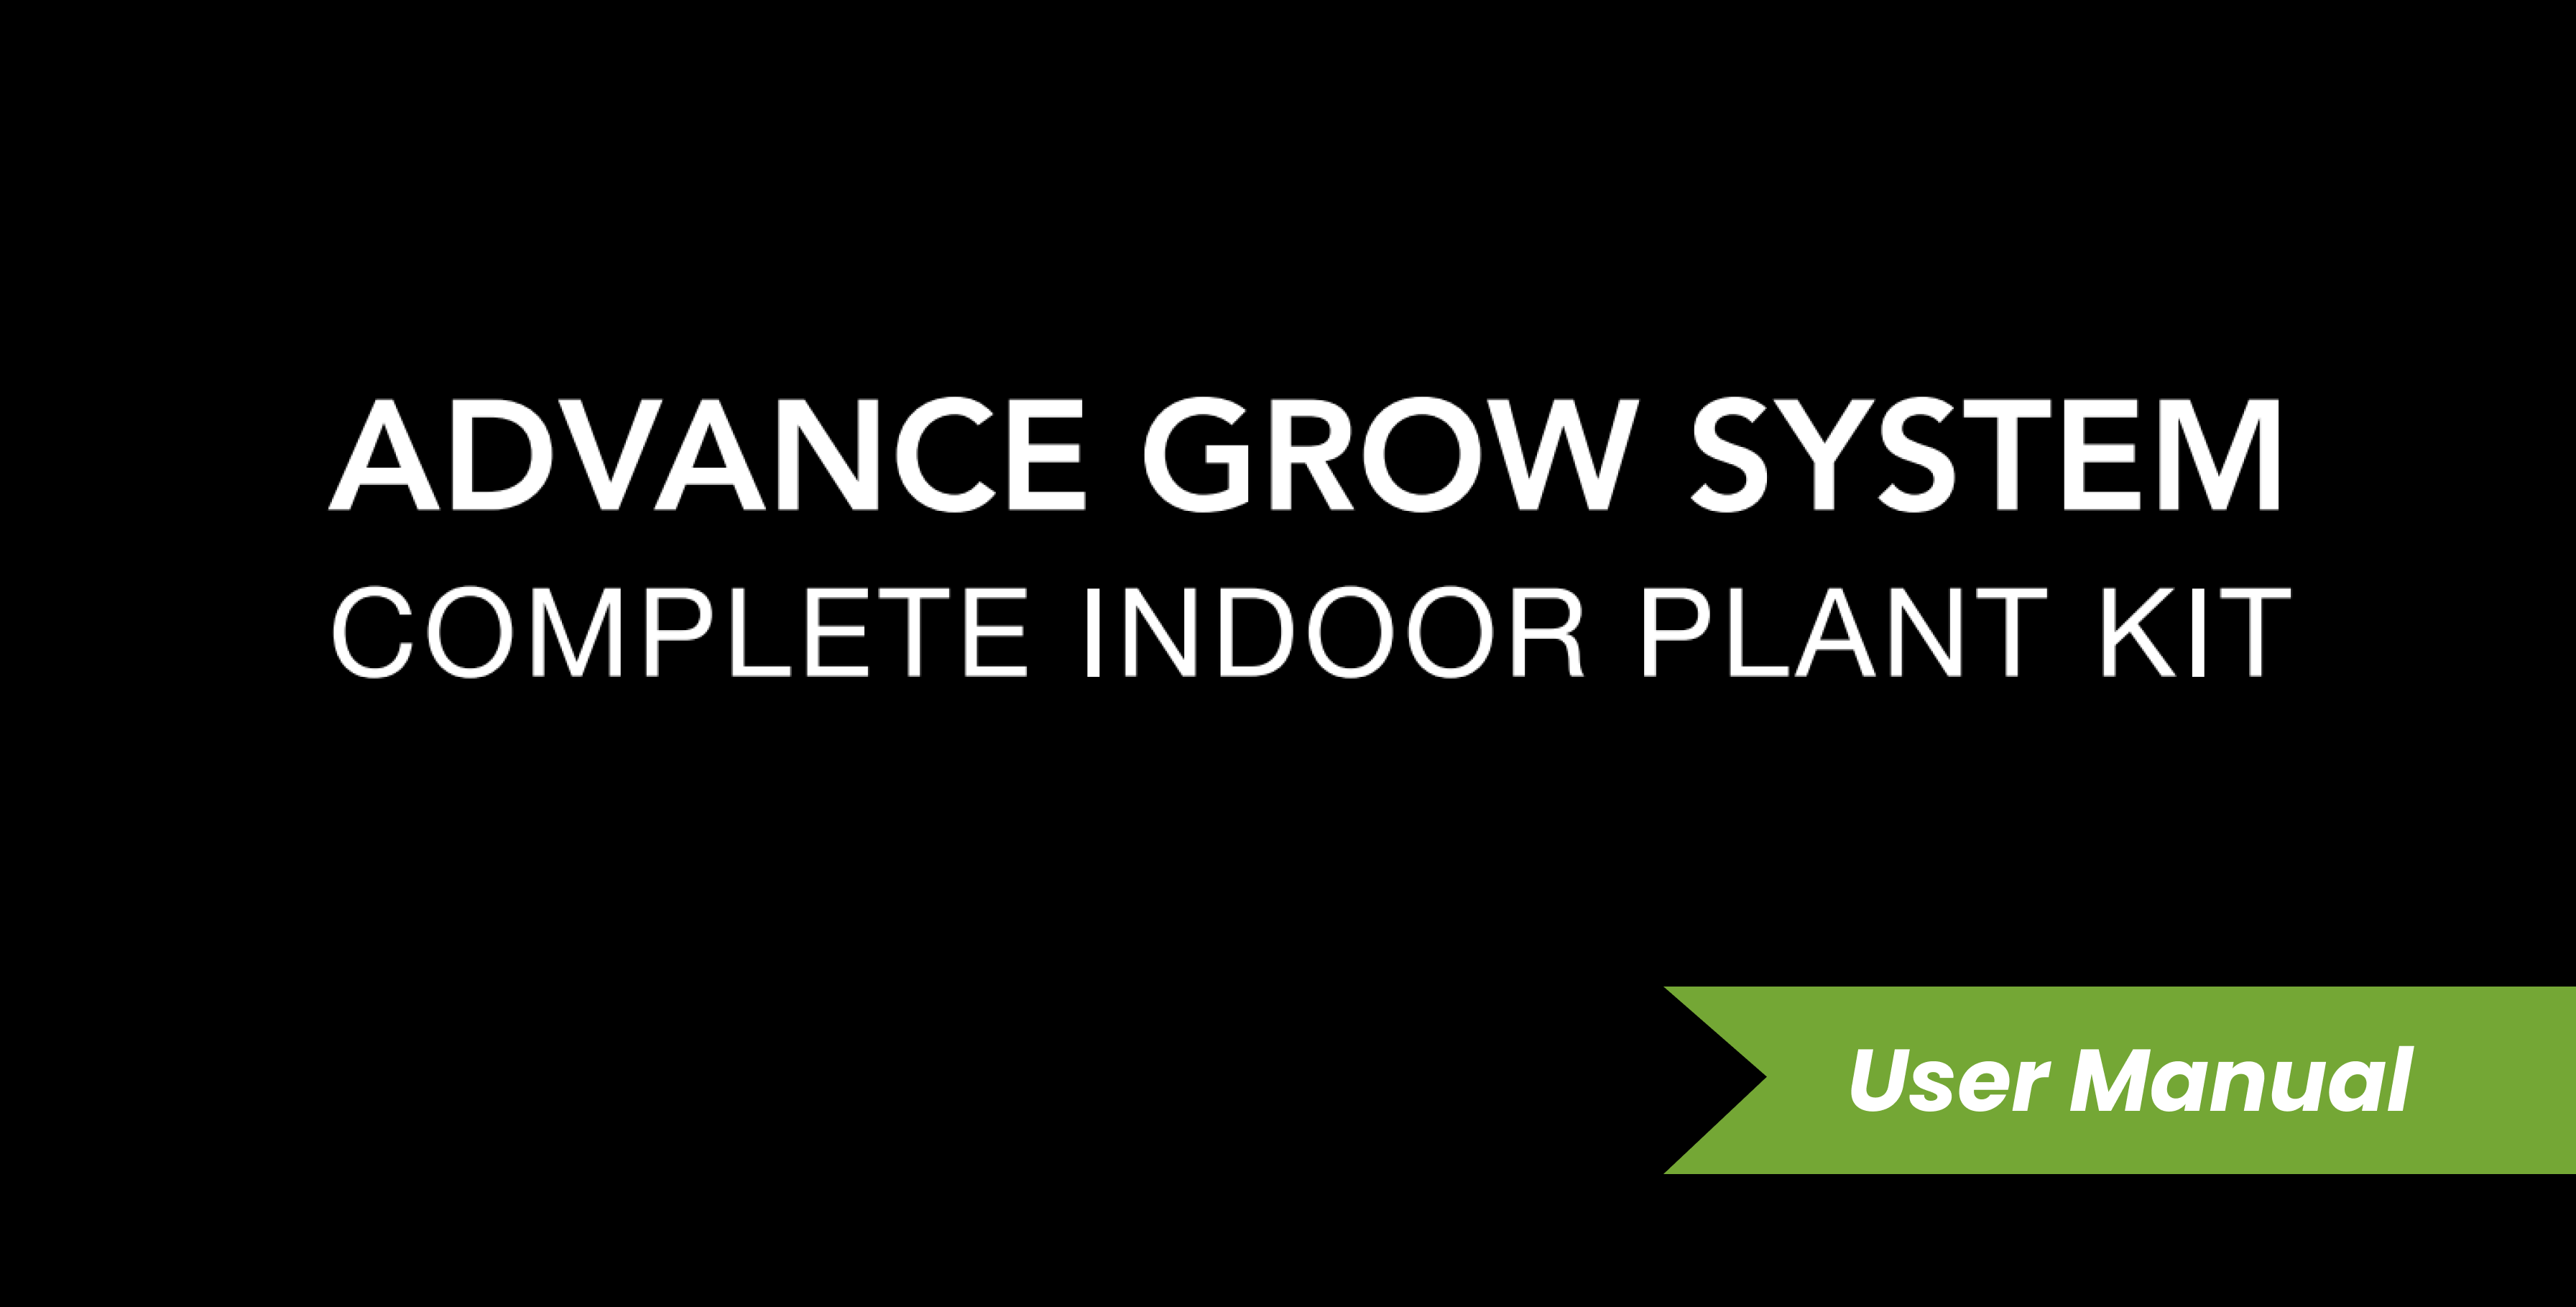 AC Infinity Advance Grow Tent System 3x3, 3-Plant Kit, Full Spectrum LED Grow Light